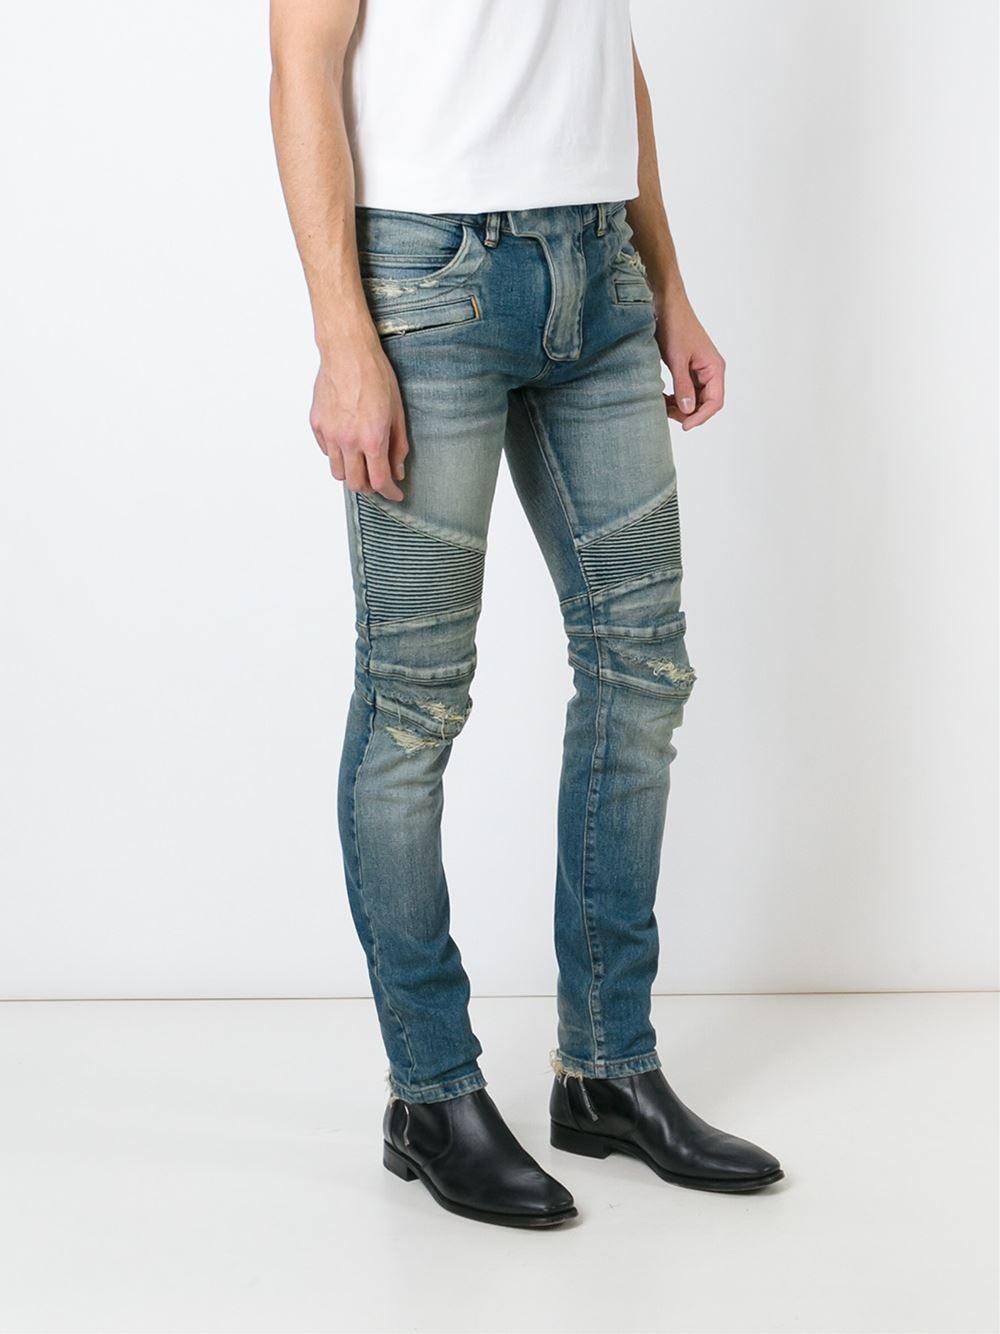 Lyst - Balmain Slim-Fit Ribbed Denim Jeans in Blue for Men